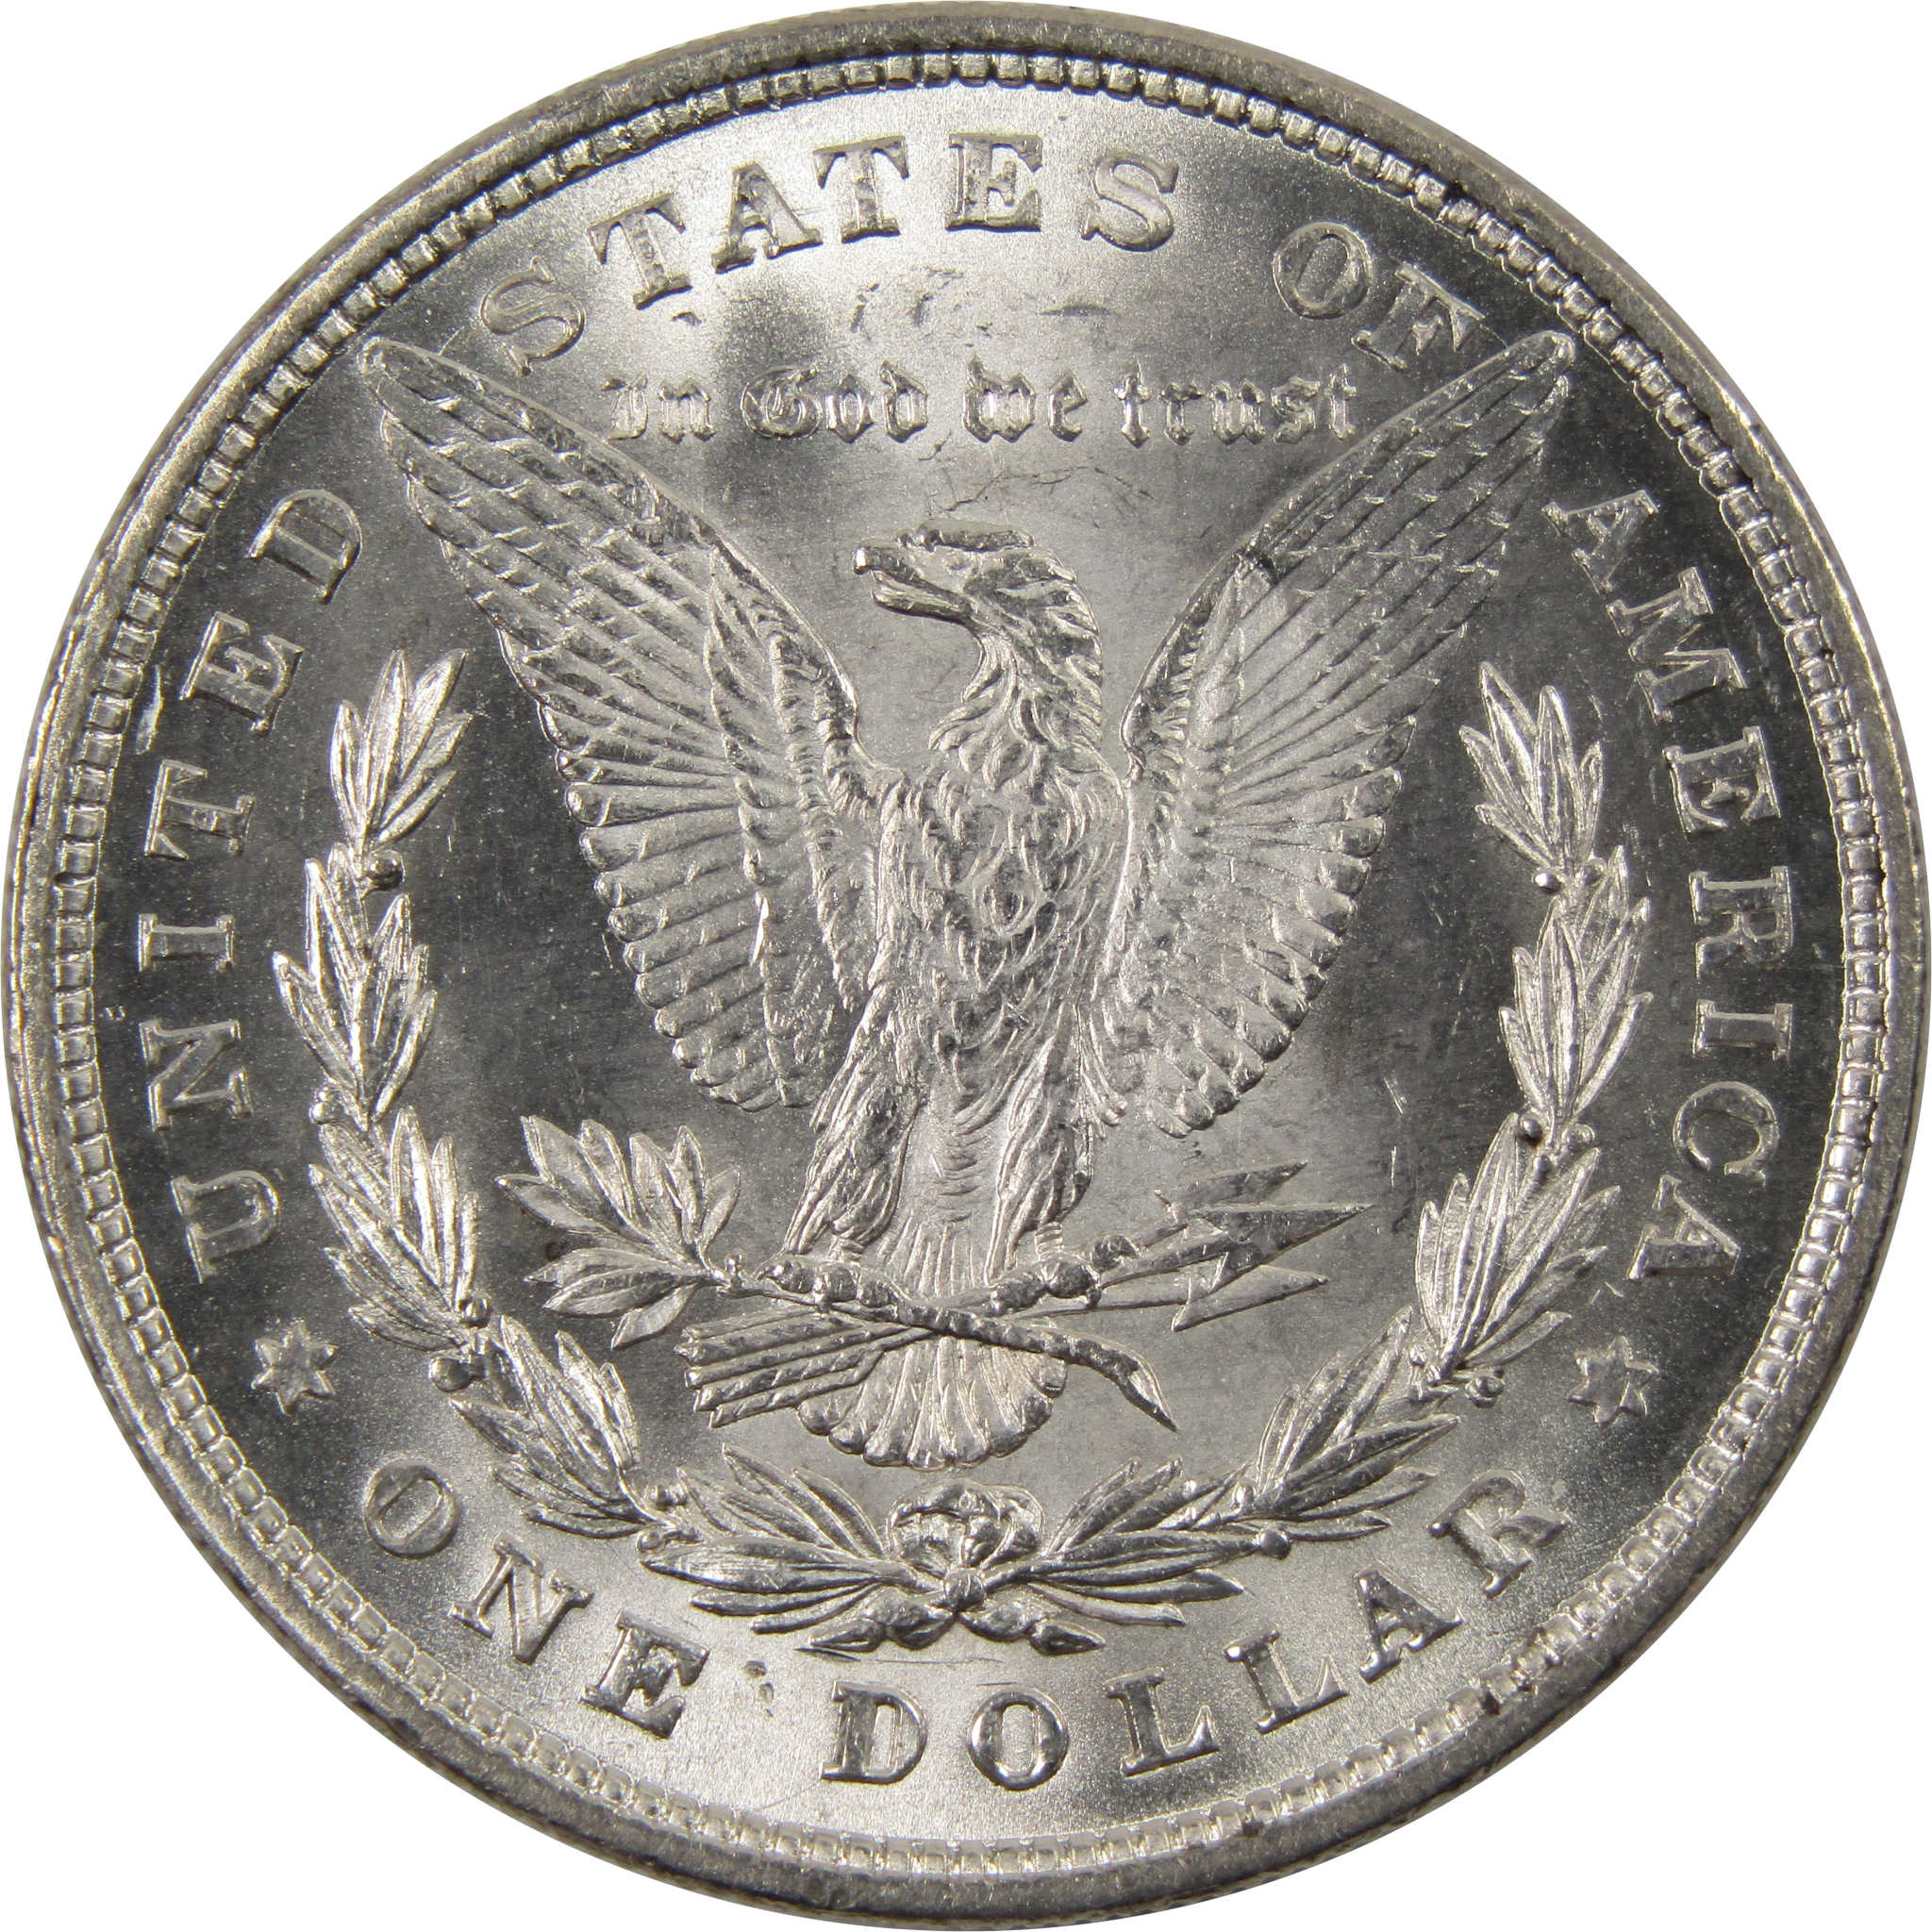 1878 8TF Morgan Dollar BU Uncirculated Silver $1 Coin SKU:I10213 - Morgan coin - Morgan silver dollar - Morgan silver dollar for sale - Profile Coins &amp; Collectibles